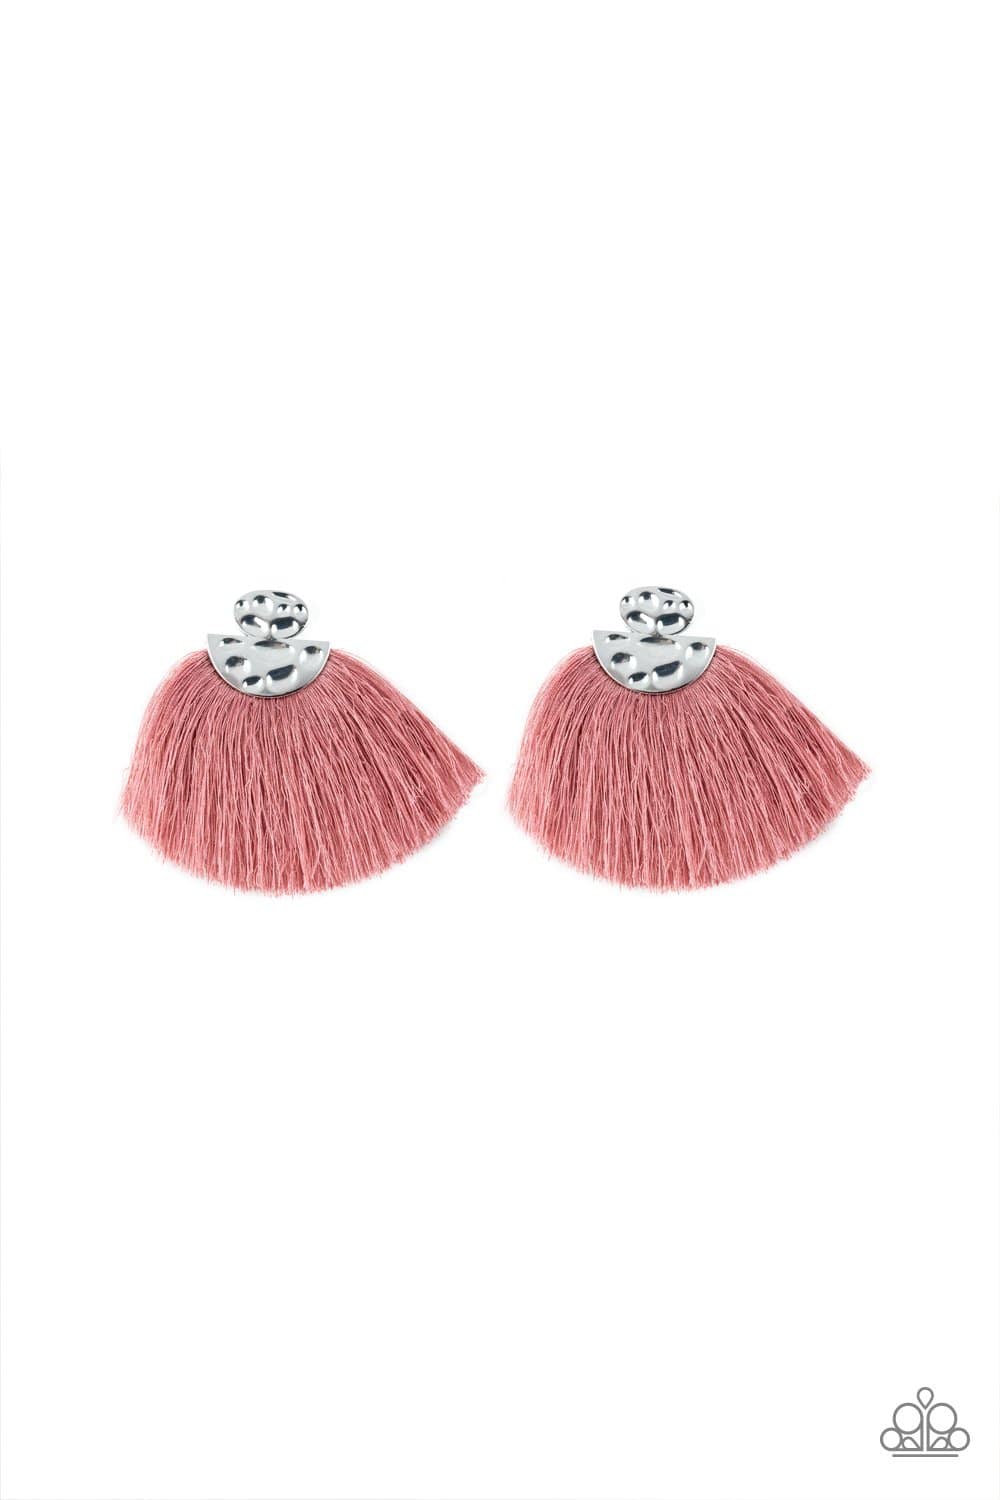 Make Some PLUME - Pink Fringe Earrings - Paparazzi Accessories - GlaMarous Titi Jewels